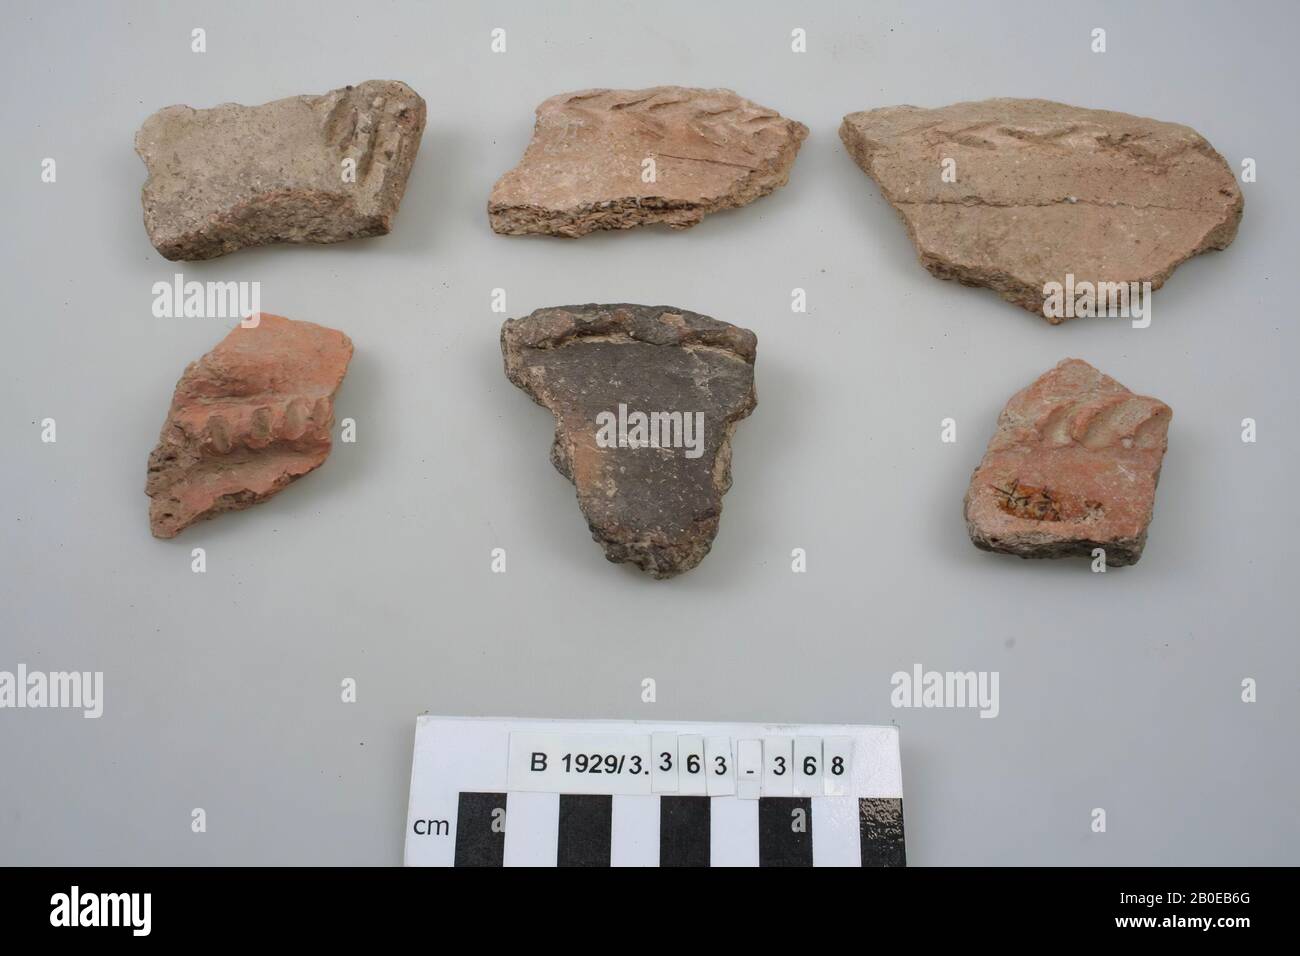 Ancient Near East, shard, earthenware, l, 6.7 cm, Location, Israel Stock Photo